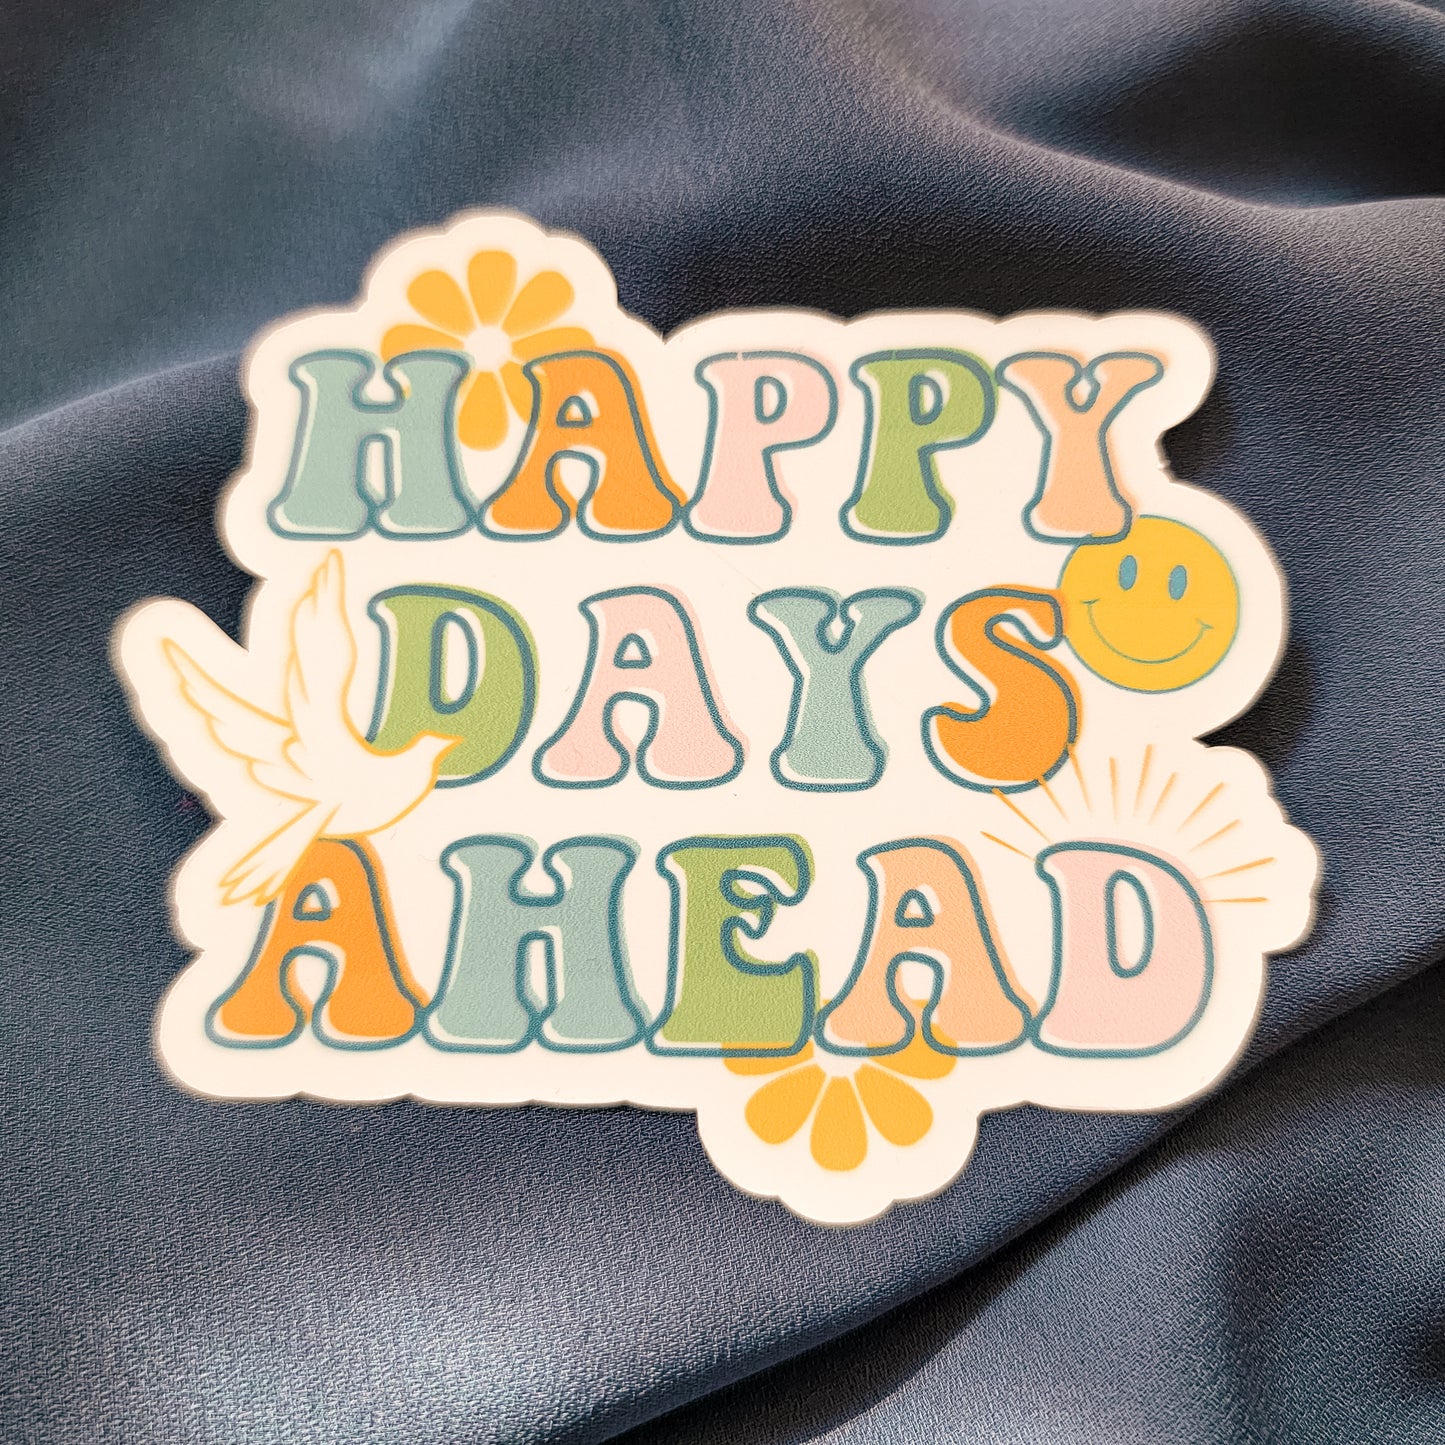 Happy Days Ahead - Sticker